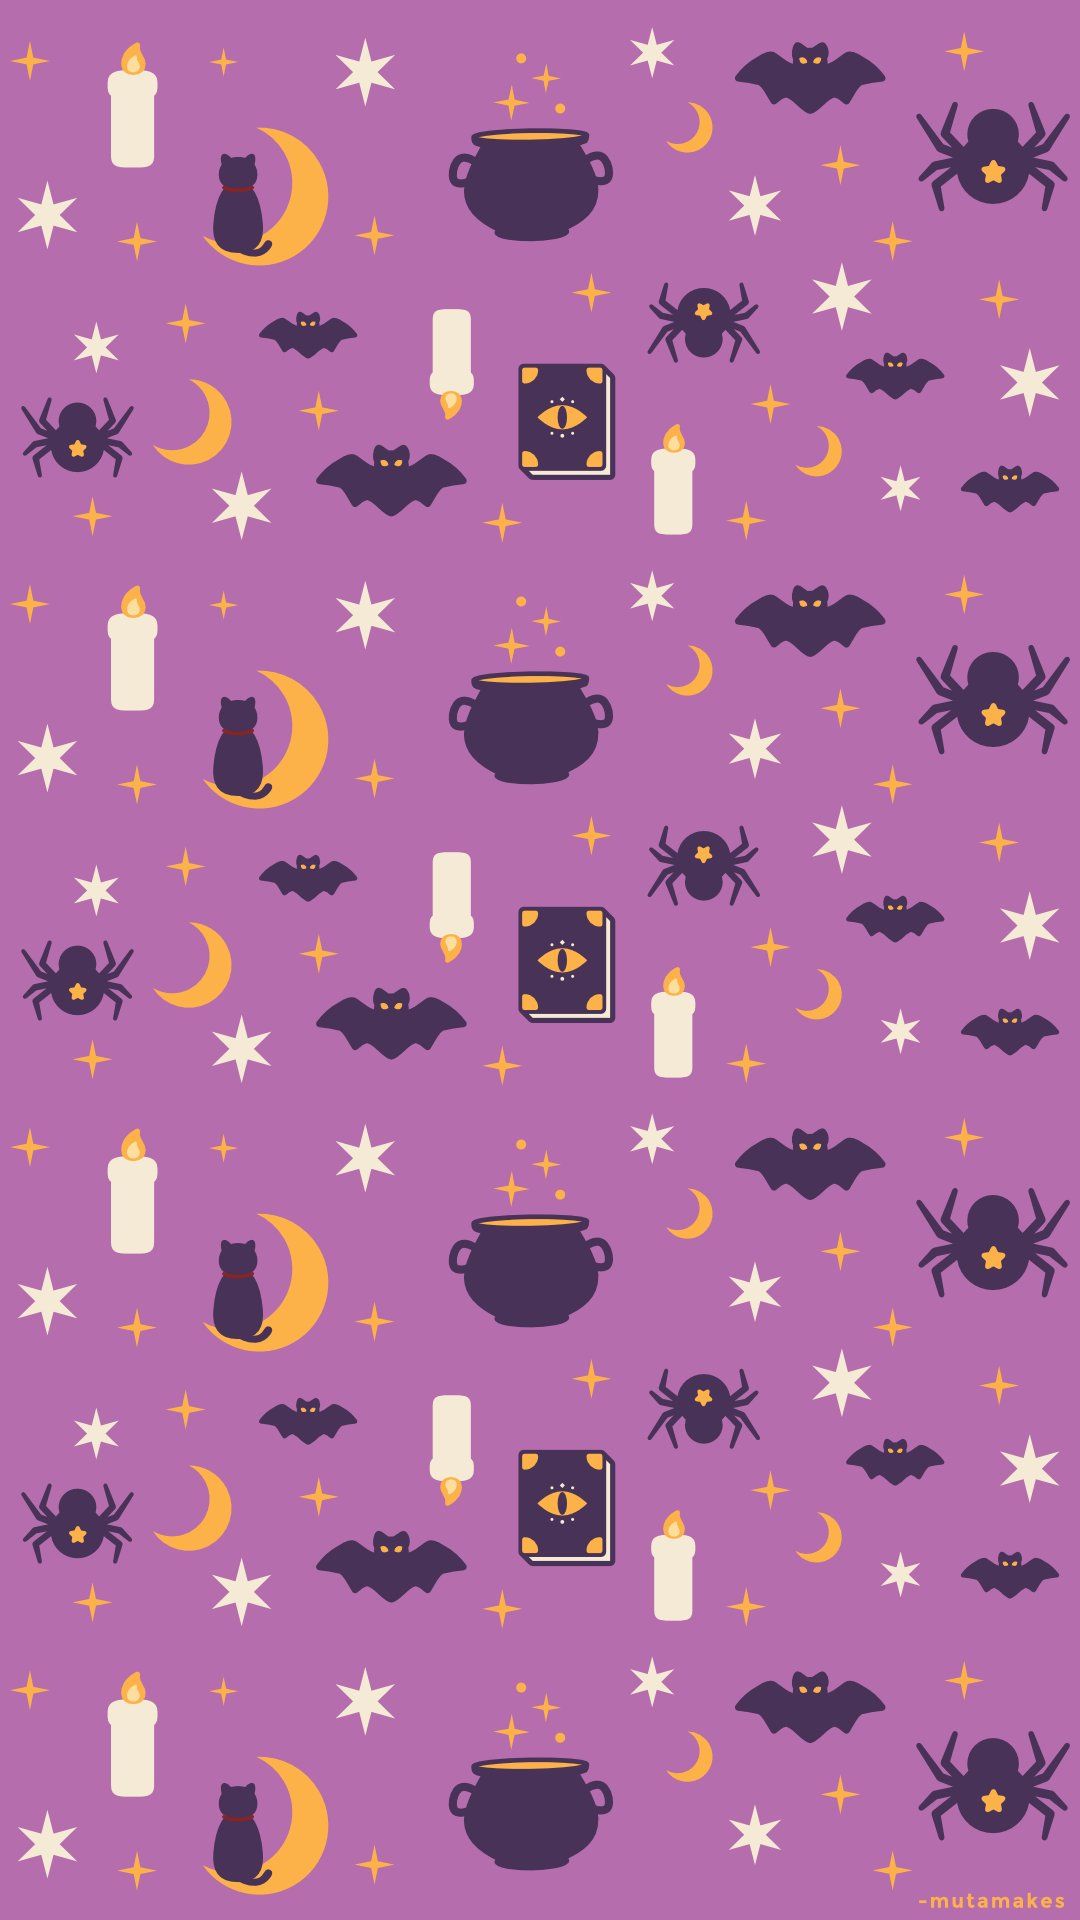 Purple Cartoon Halloween Mobile Wallpaper Template and Ideas for Design   Fotor